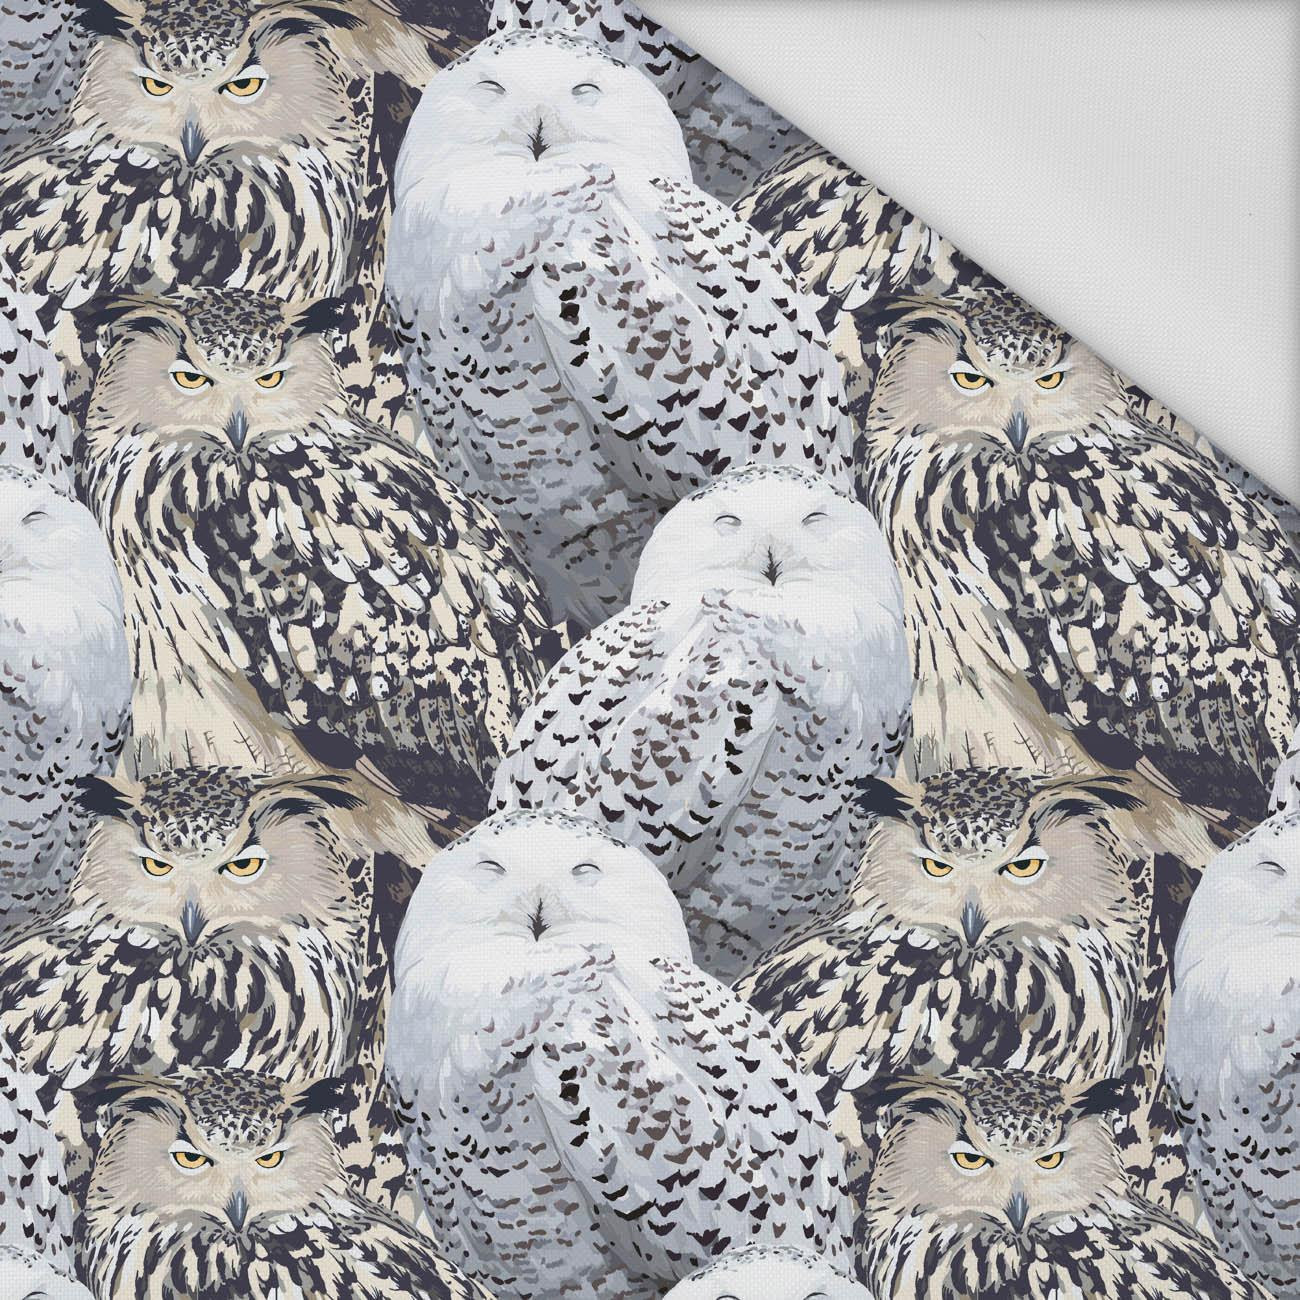 EAGLE-OWLS - Waterproof woven fabric